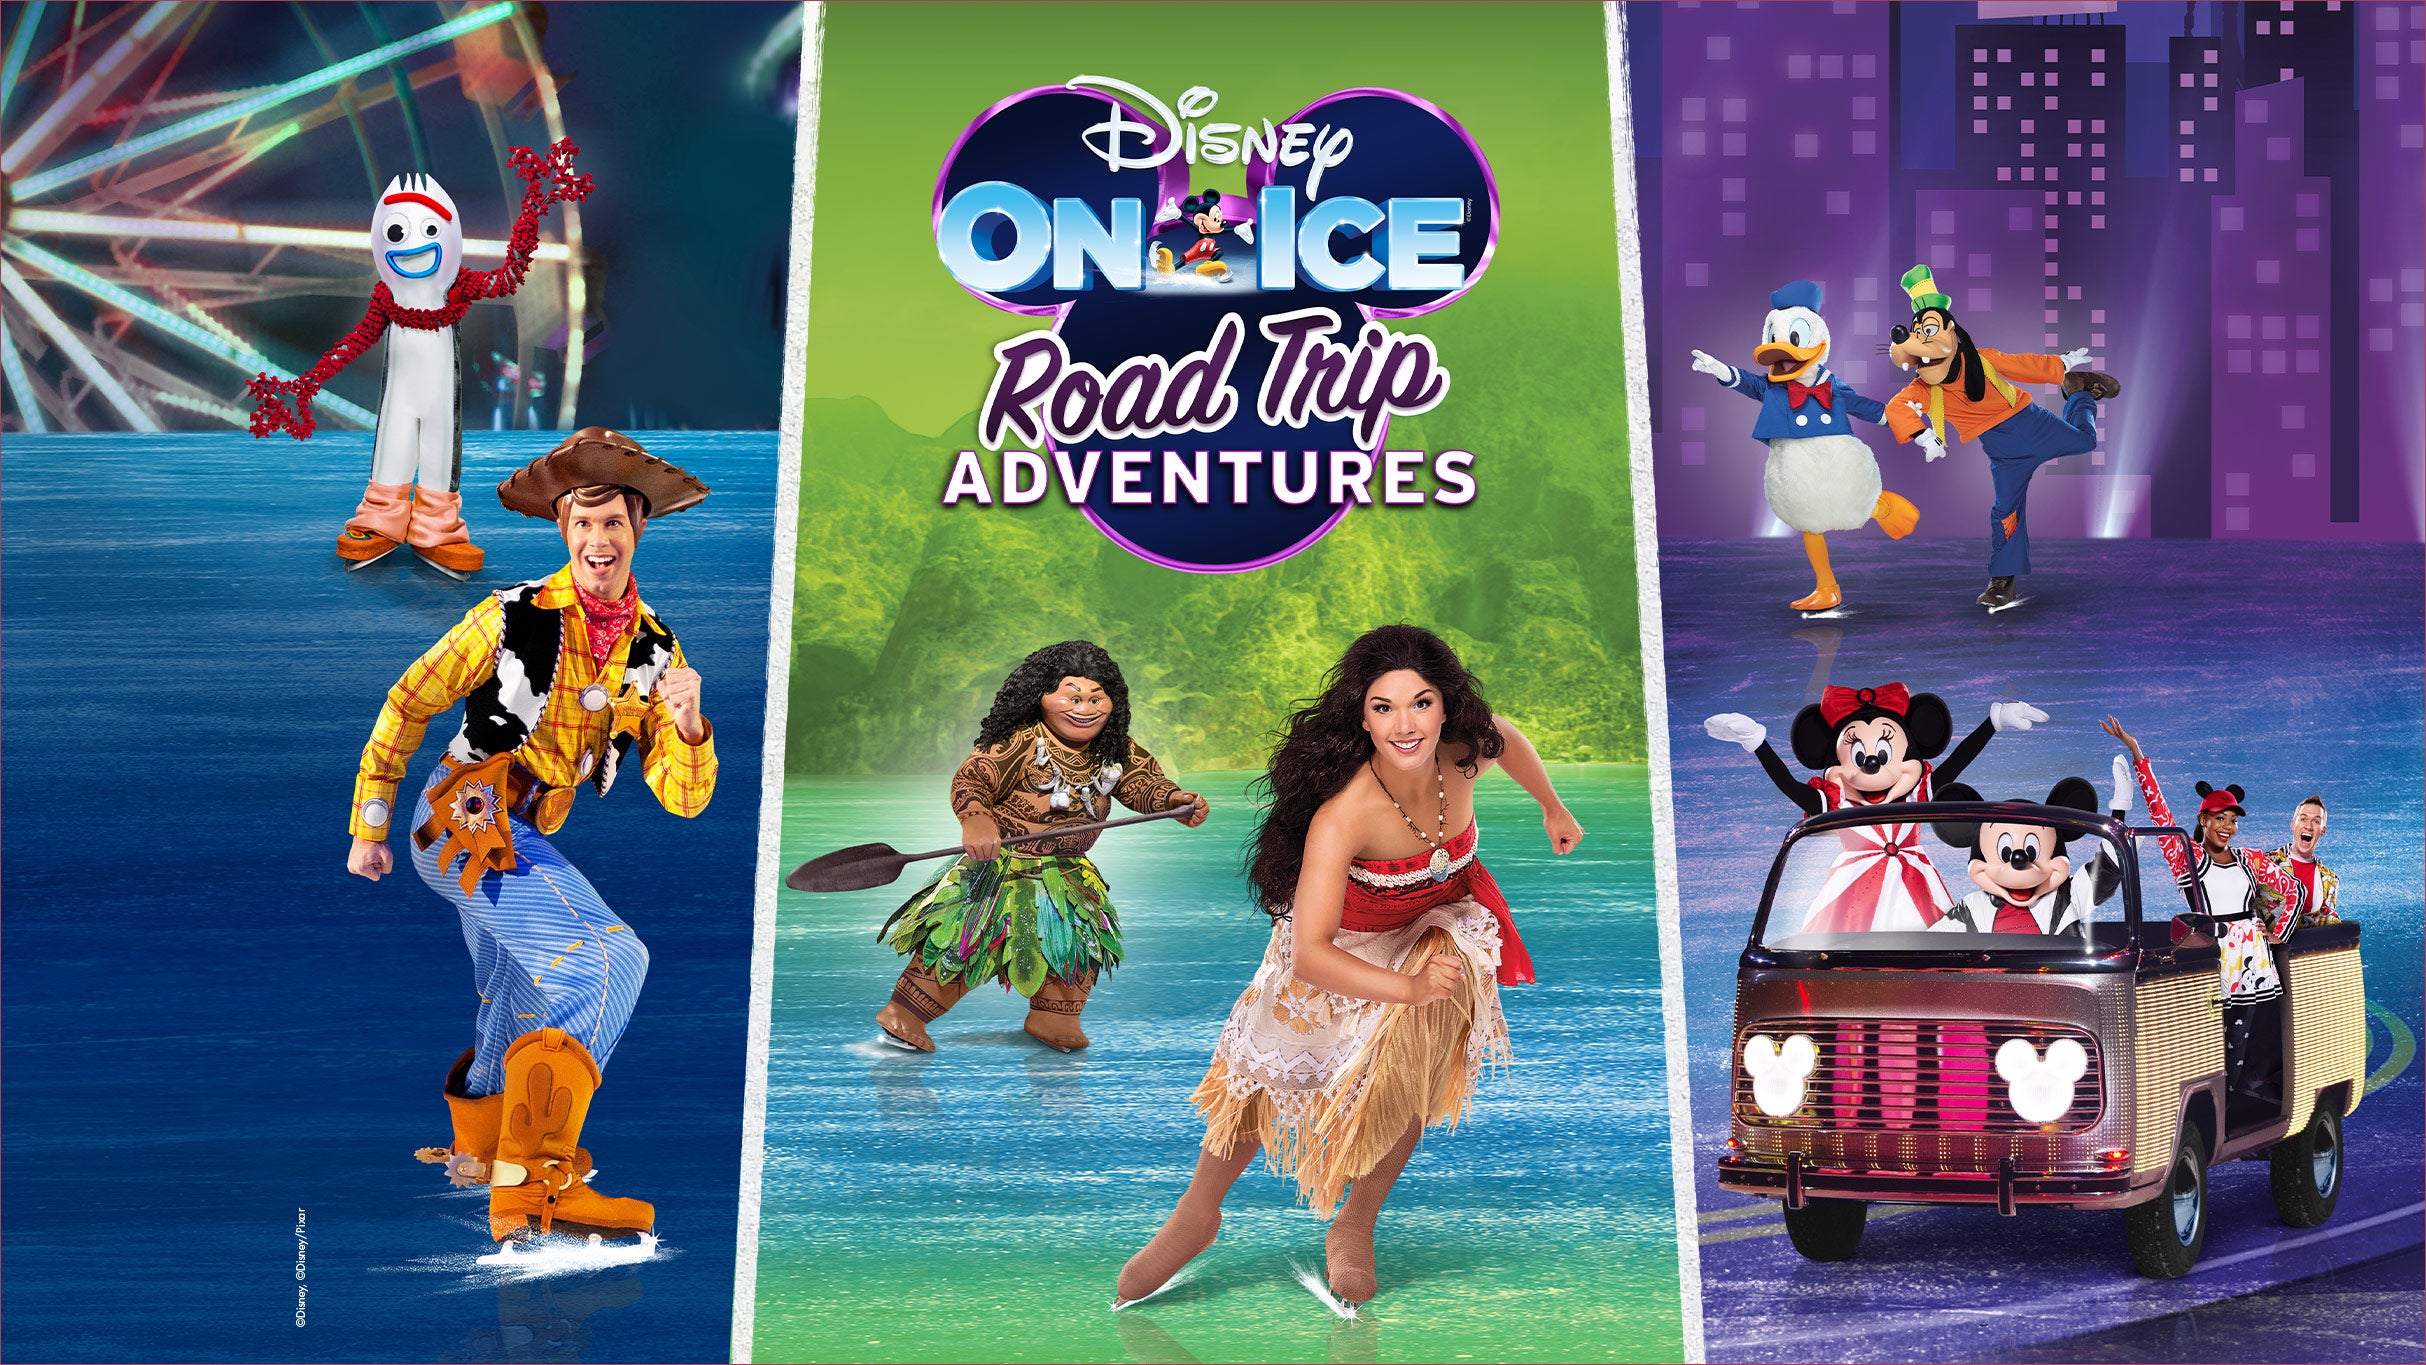 Disney On Ice presents Road Trip Adventures in Birmingham promo photo for Feld Presale Priority presale offer code